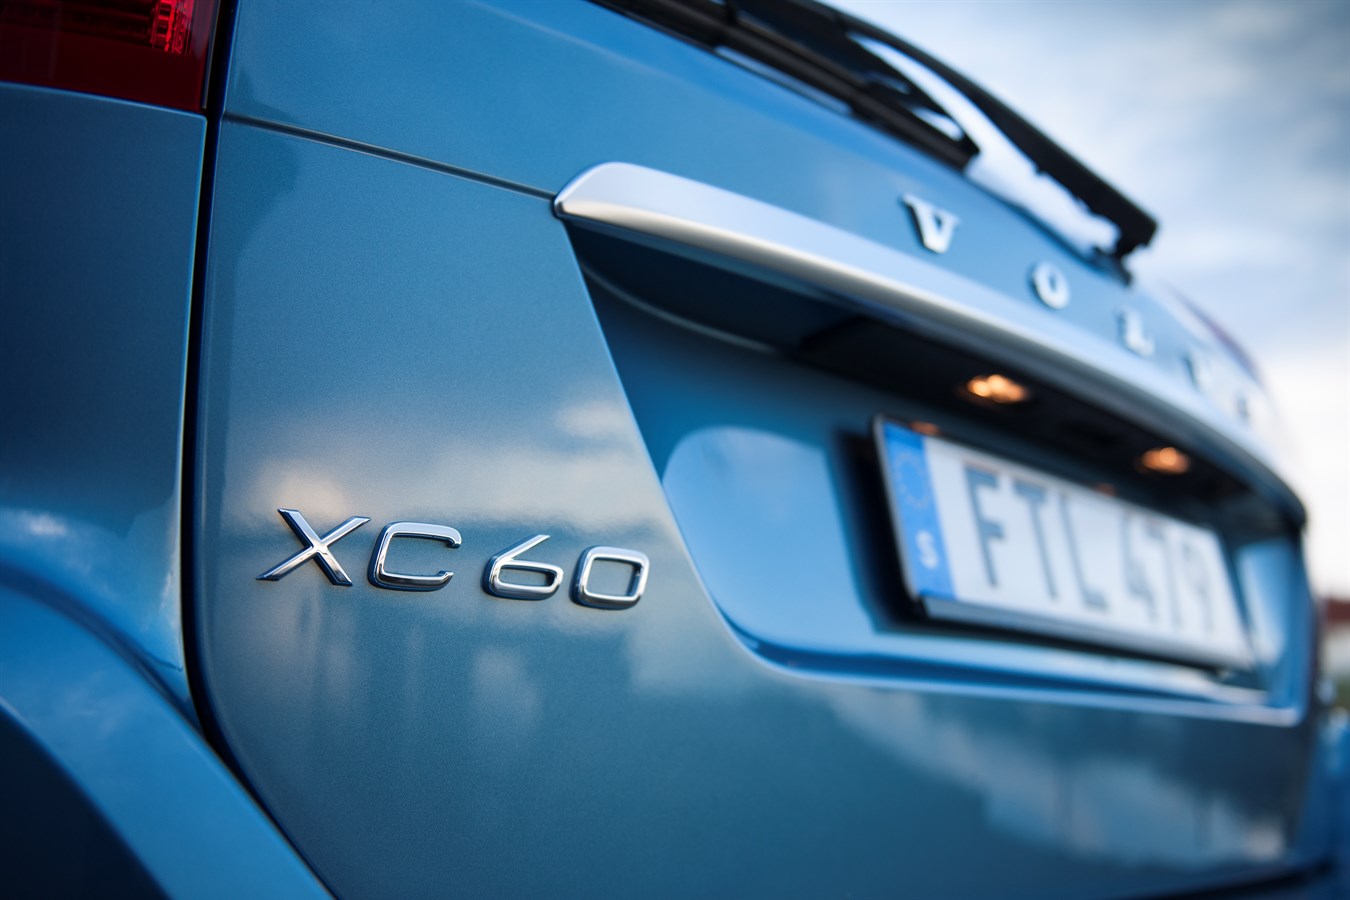 Volvo XC60 - model year 2016